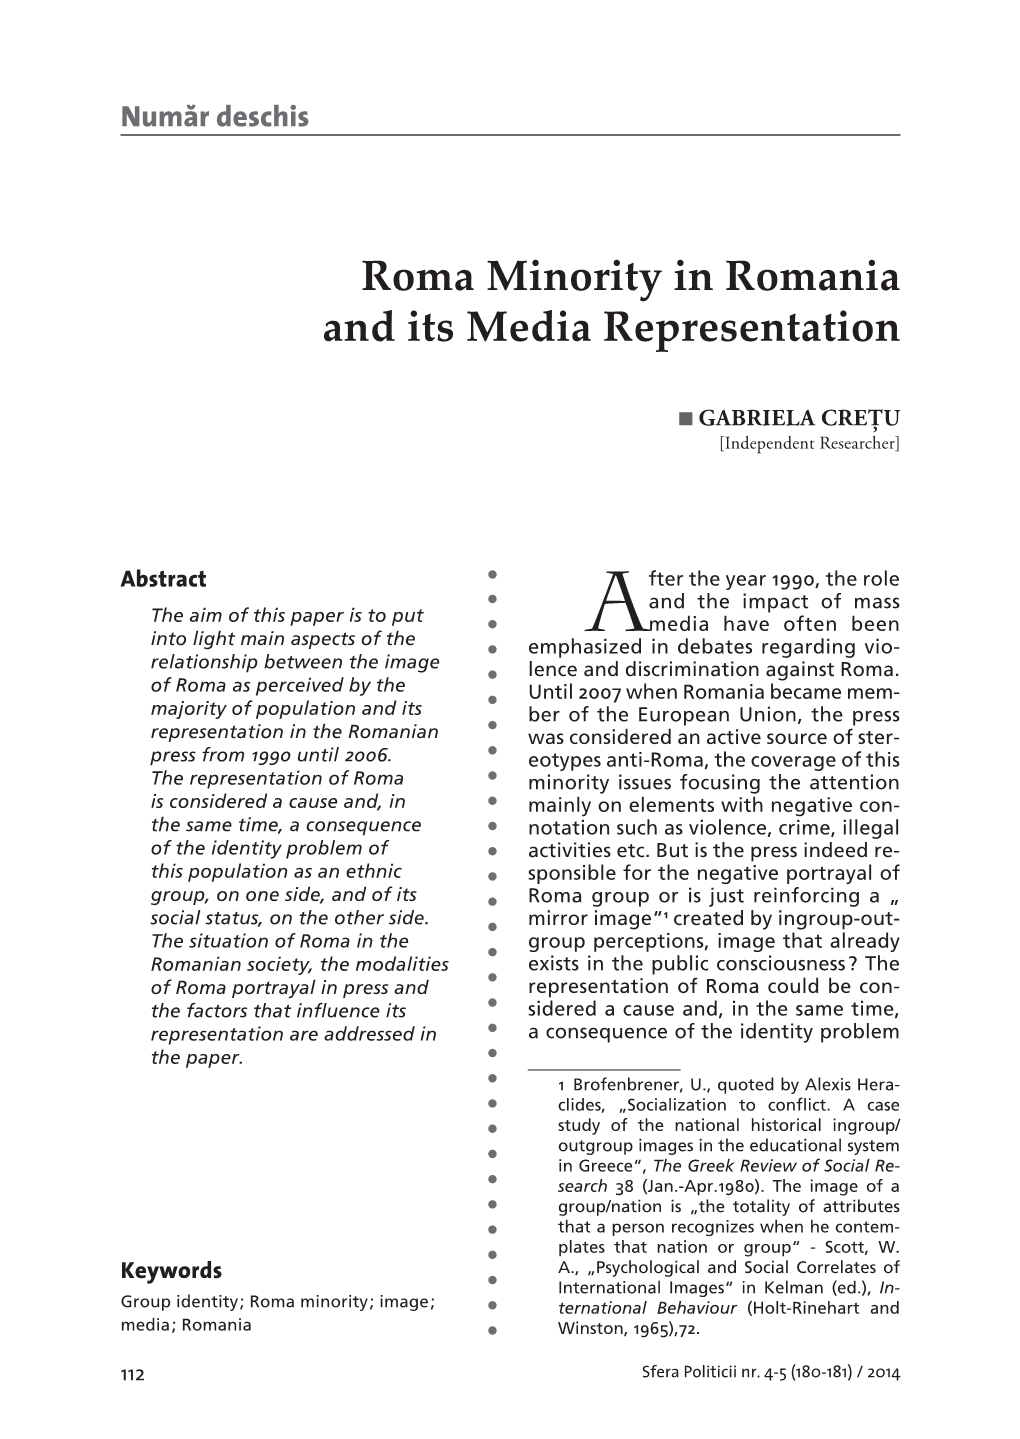 Roma Minority in Romania and Its Media Representation